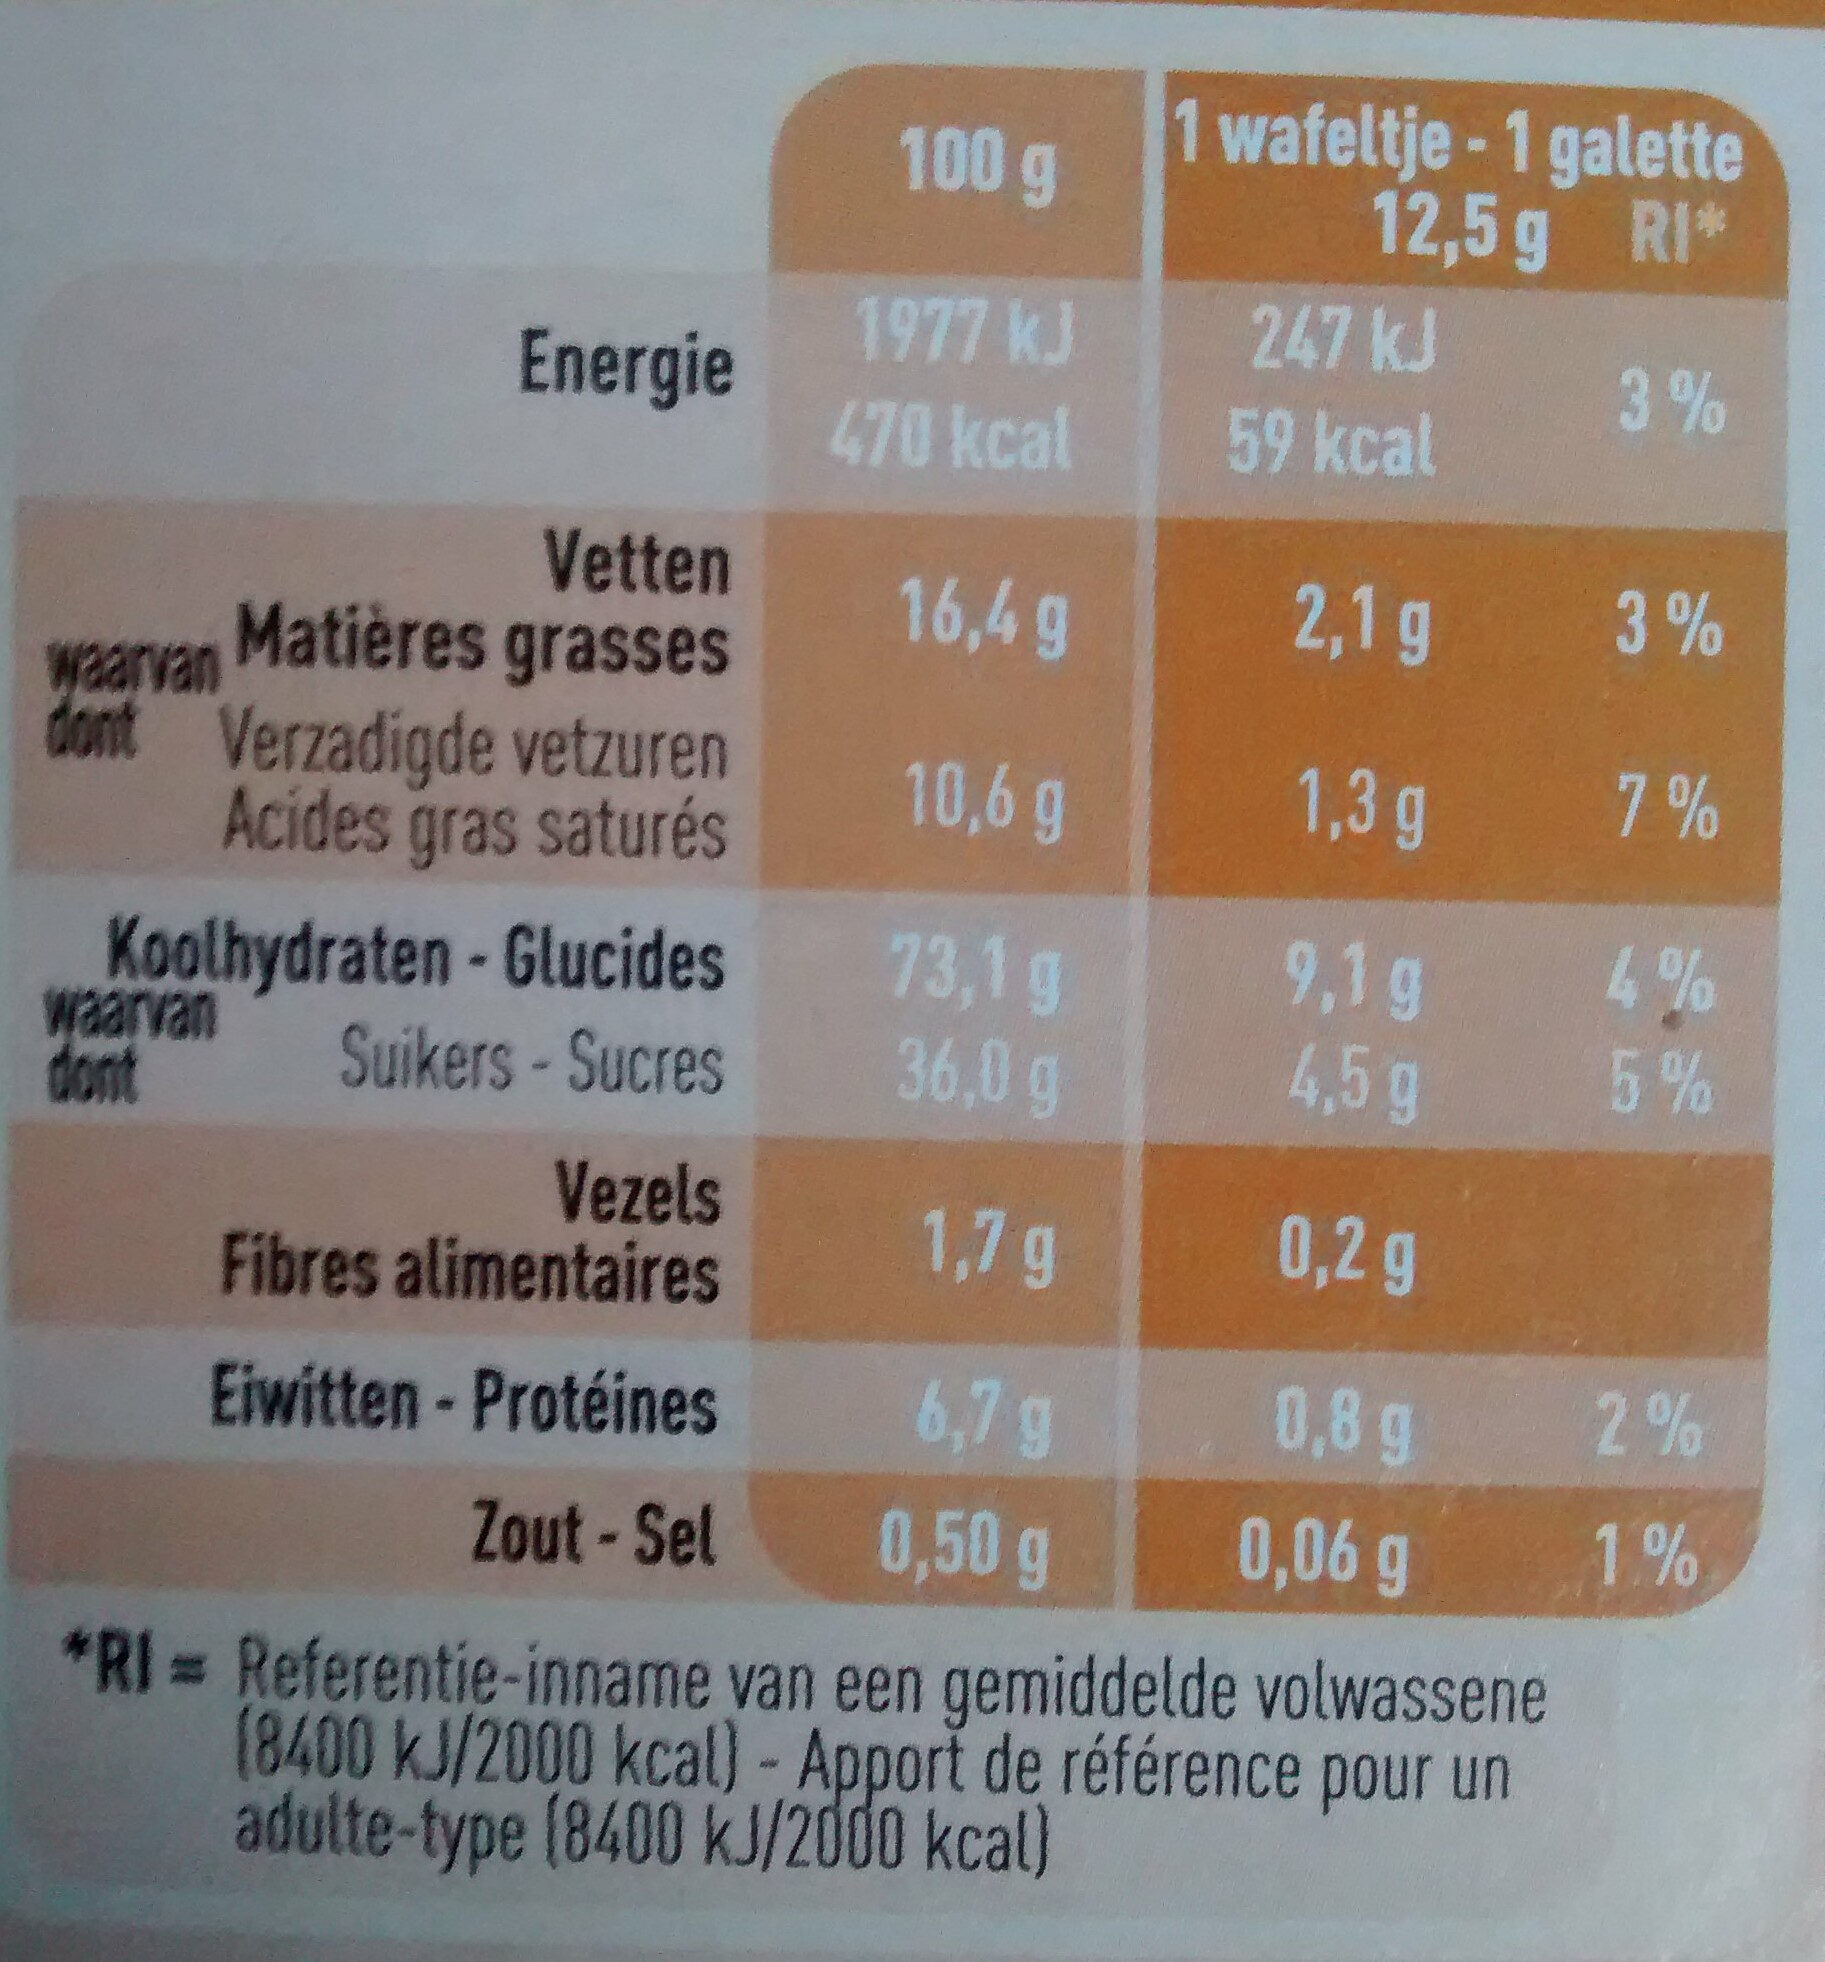 Galettes au beurre - Ingredients - fr